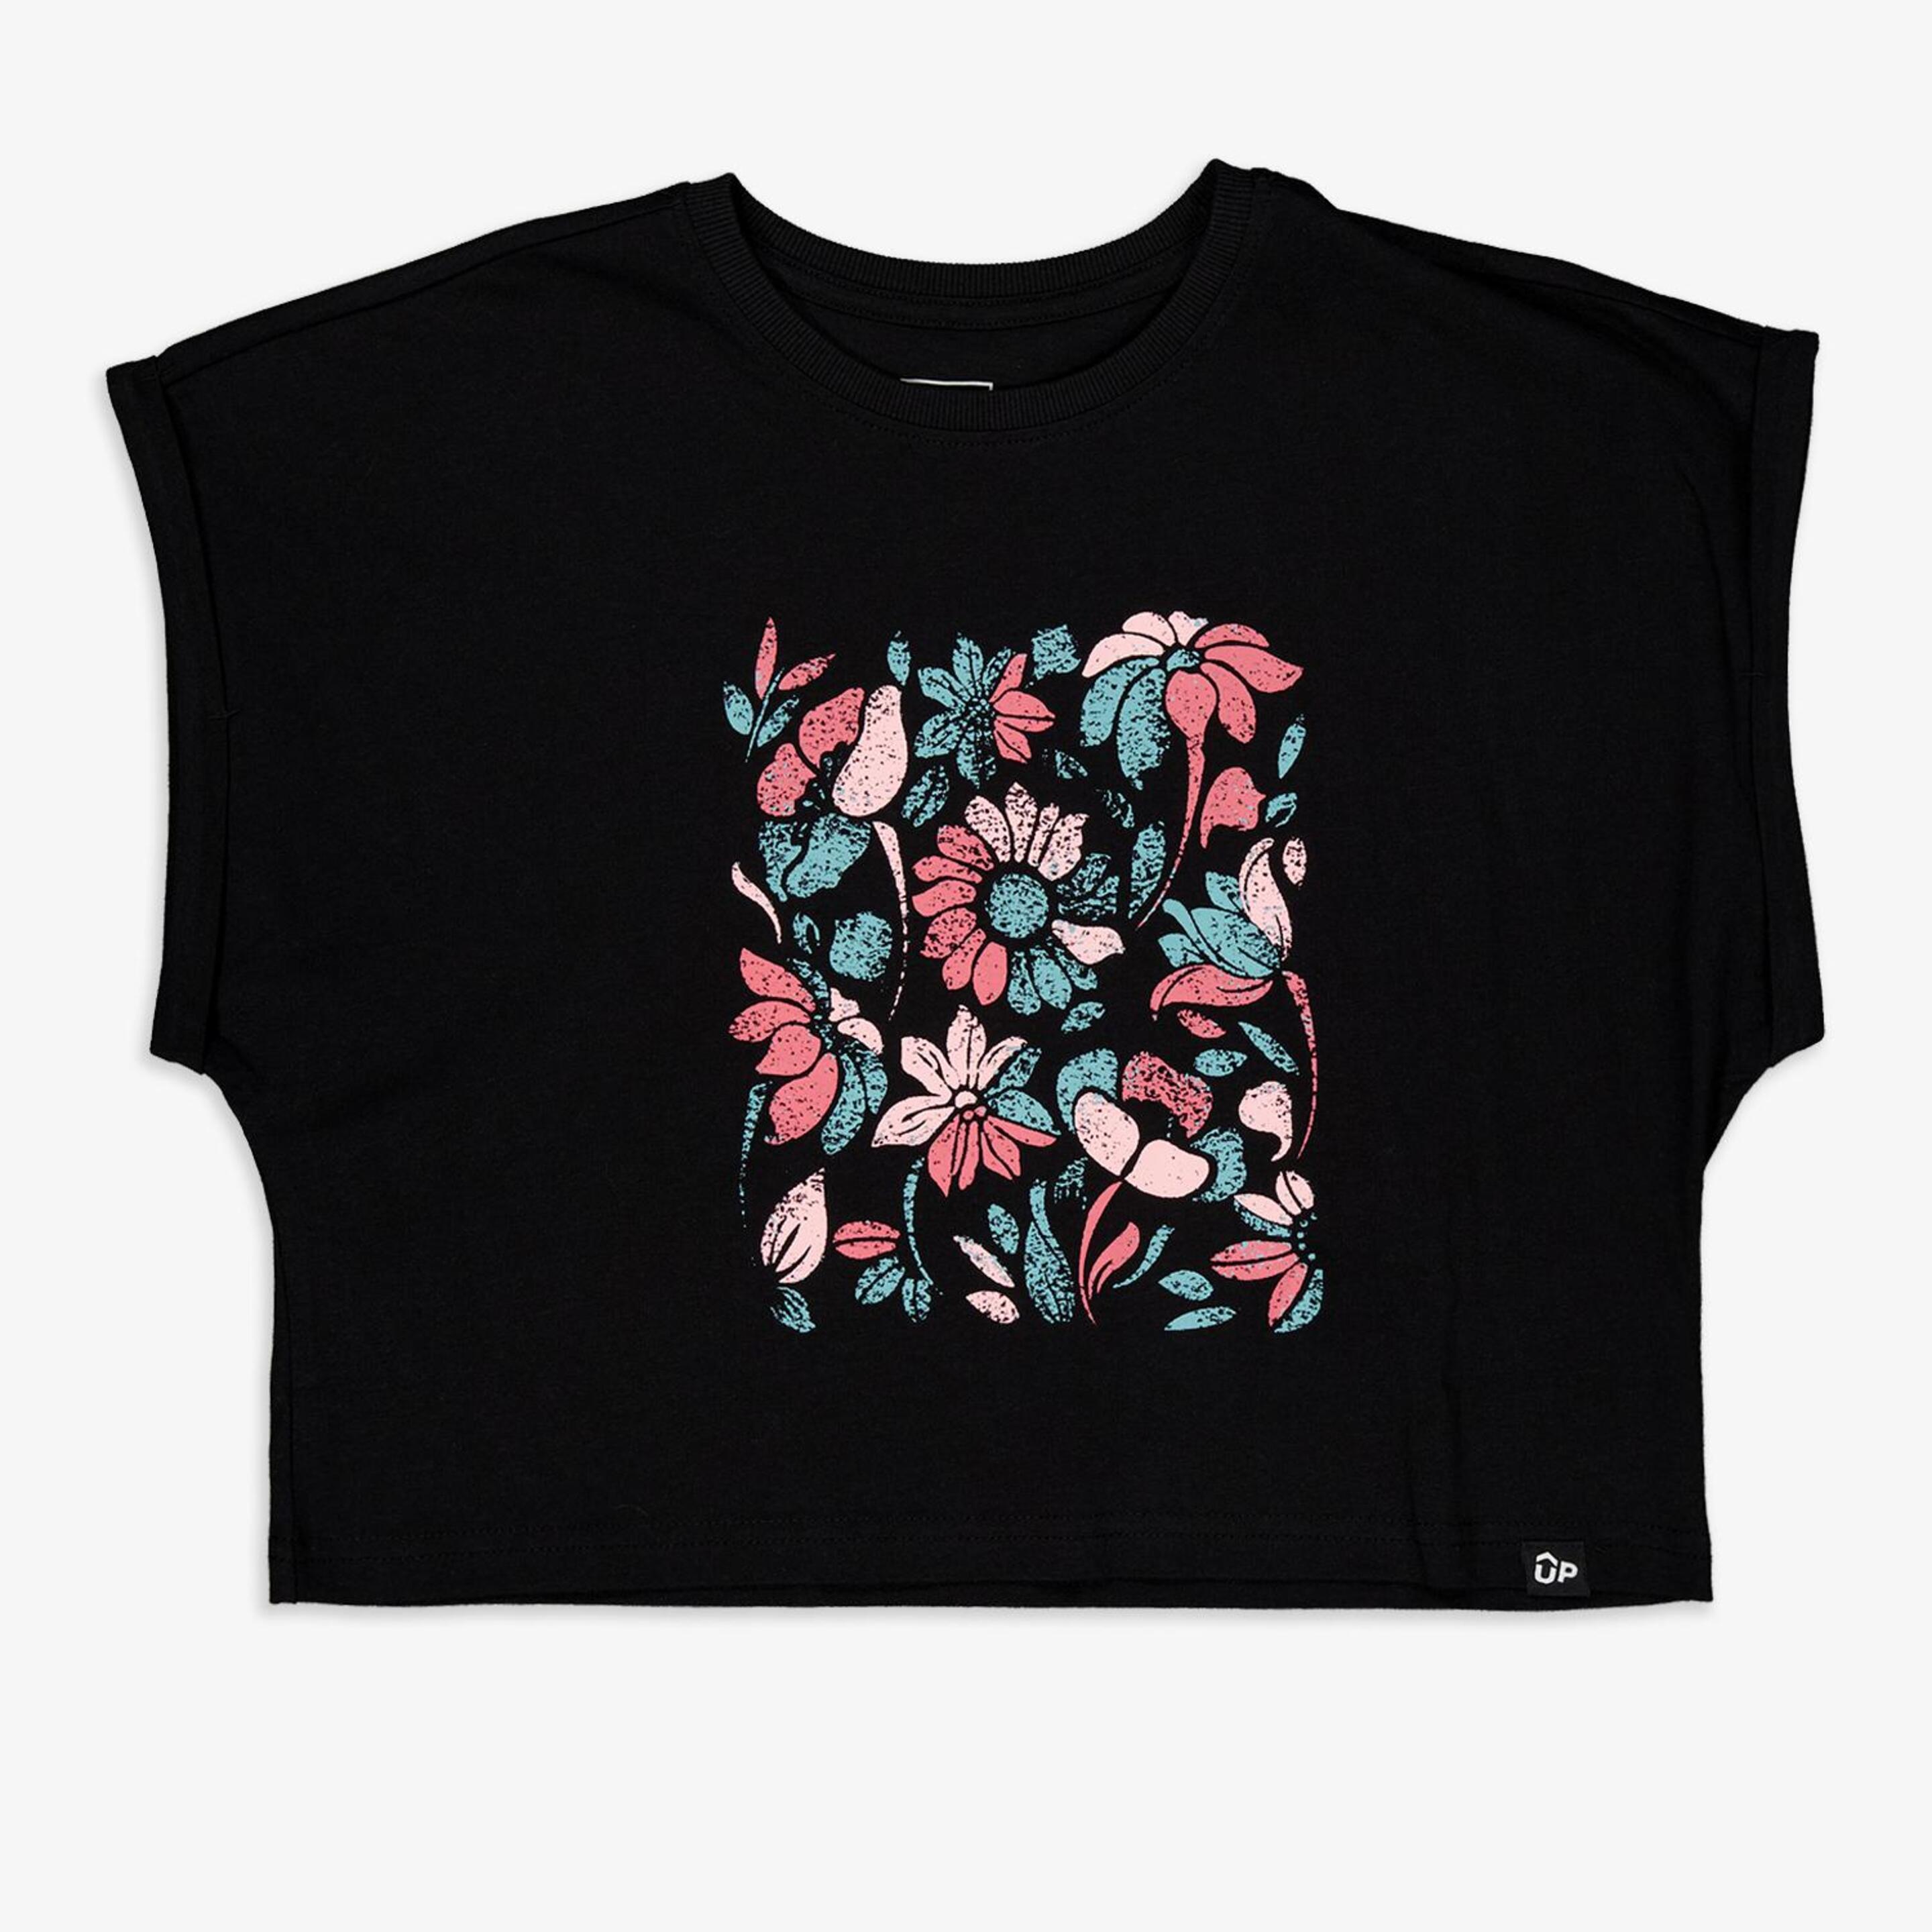 Up Basic 2 - negro - T-shirt Crop Rapariga